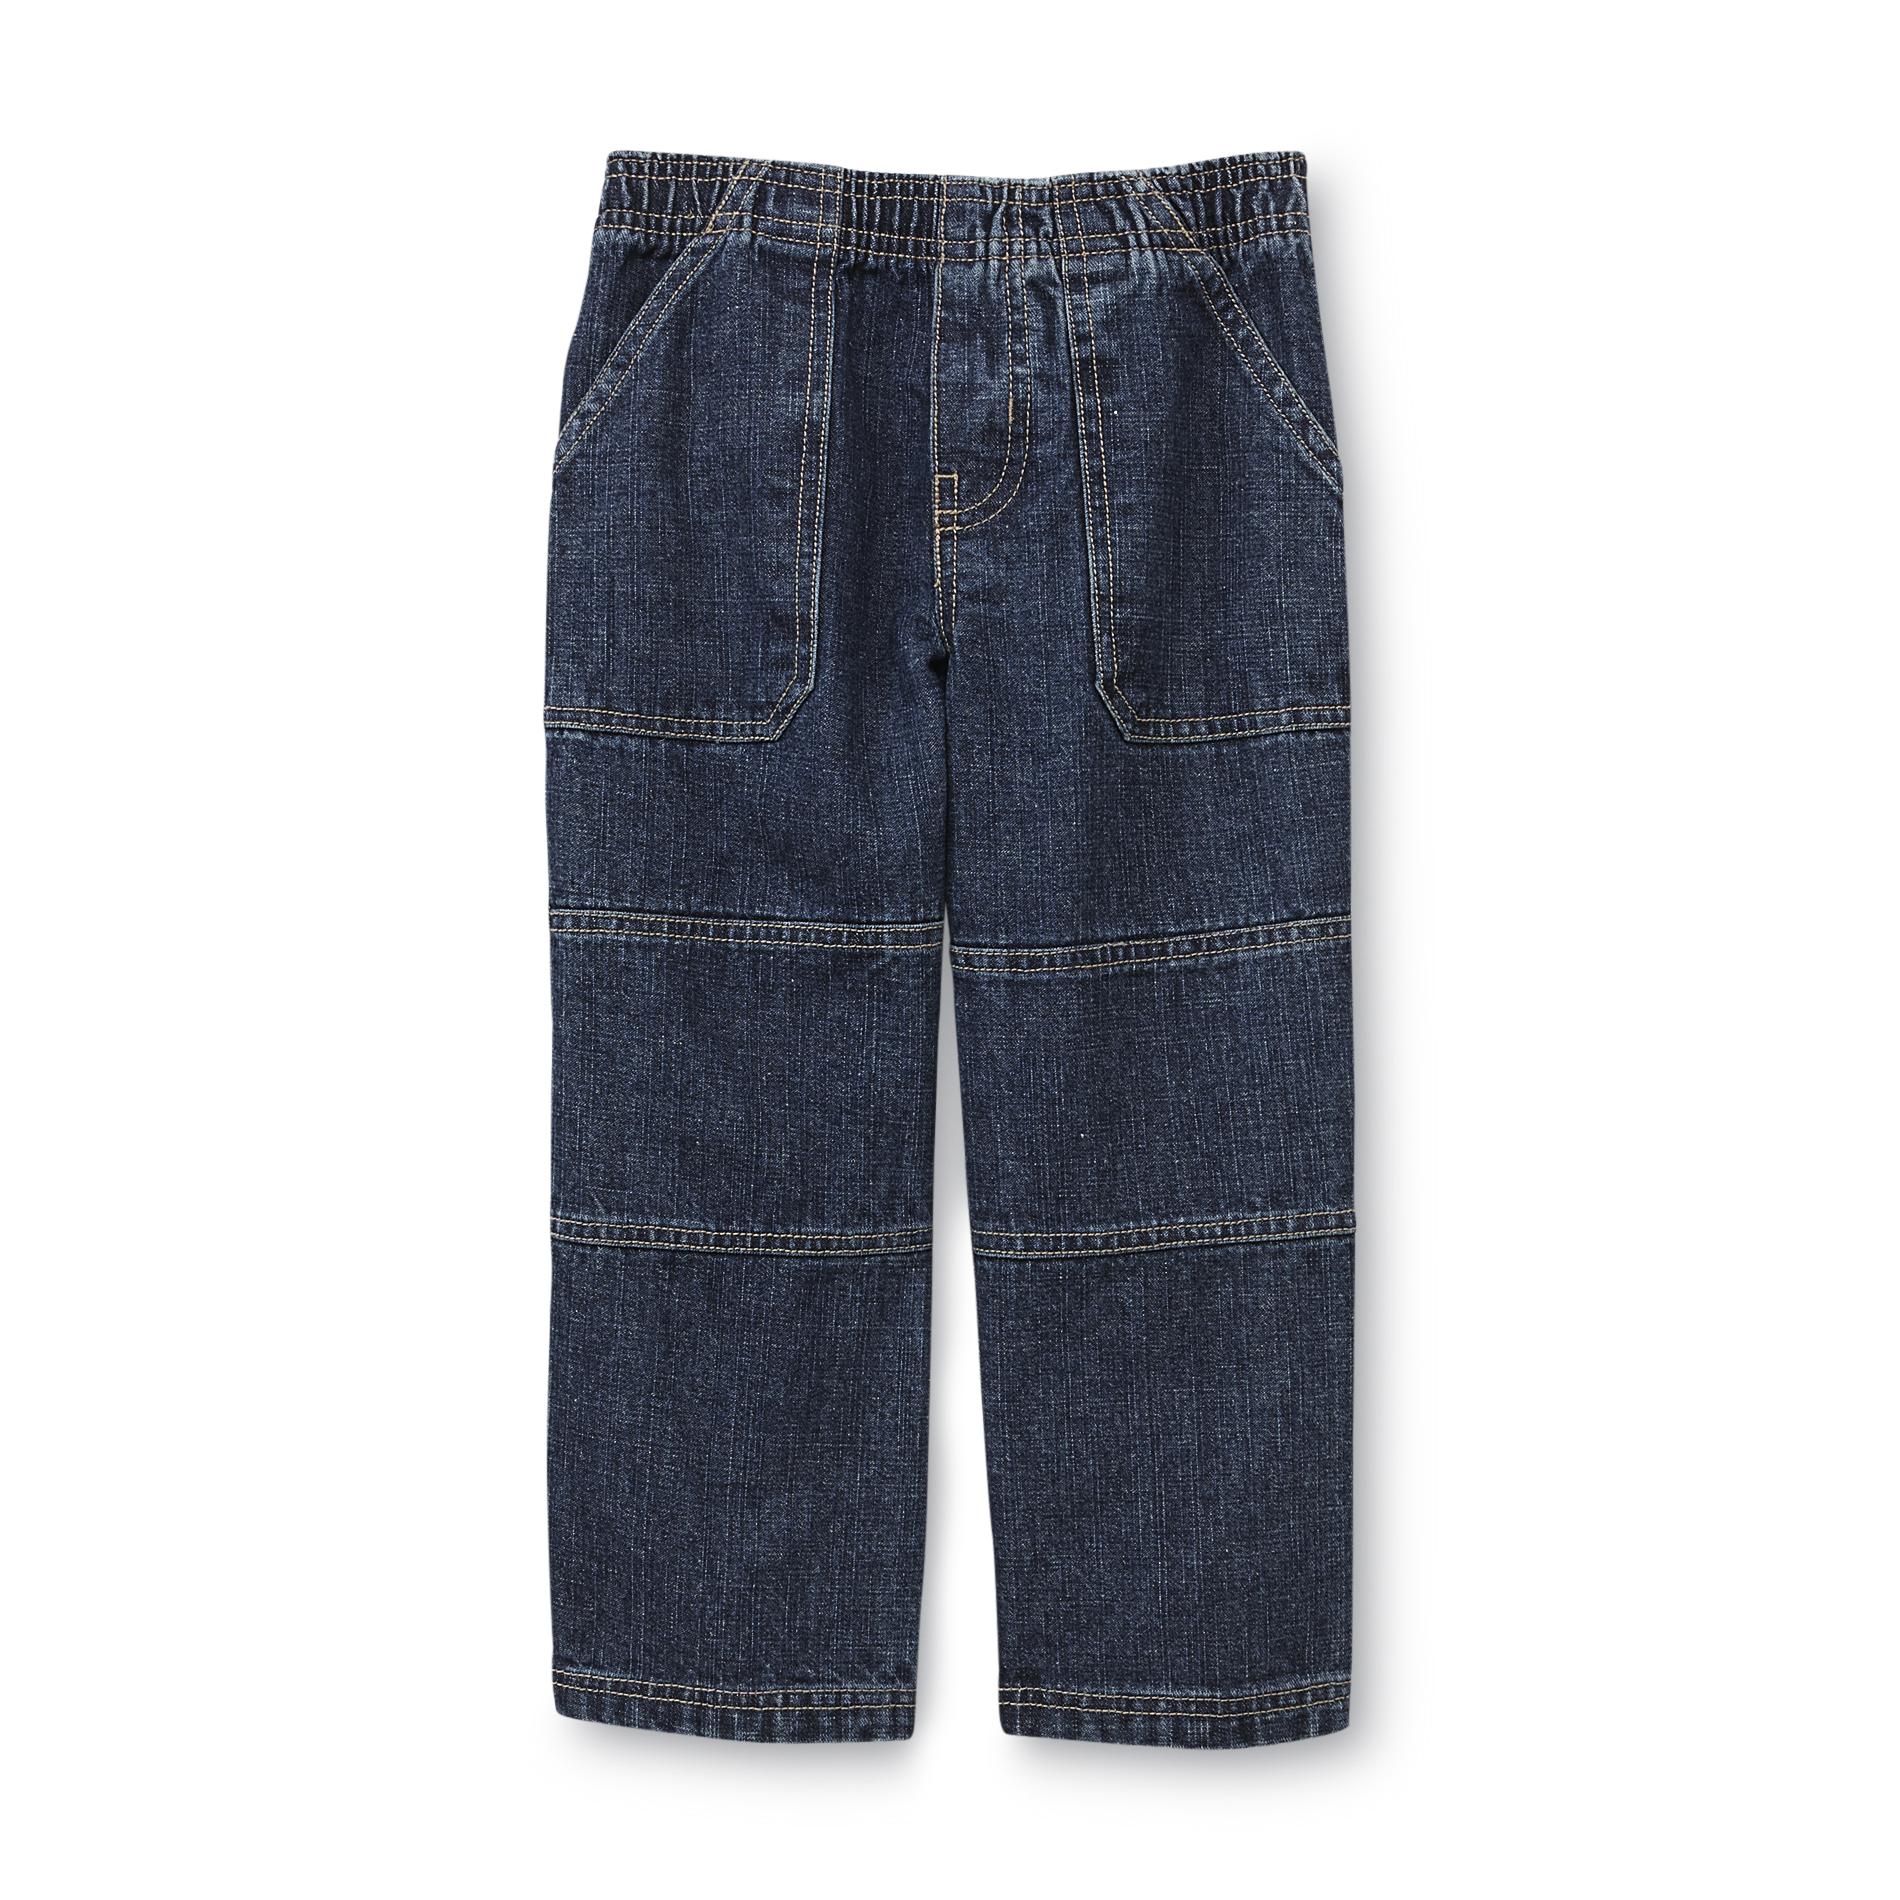 Toughskins Infant & Toddler Boy's Elastic-Waist Jeans